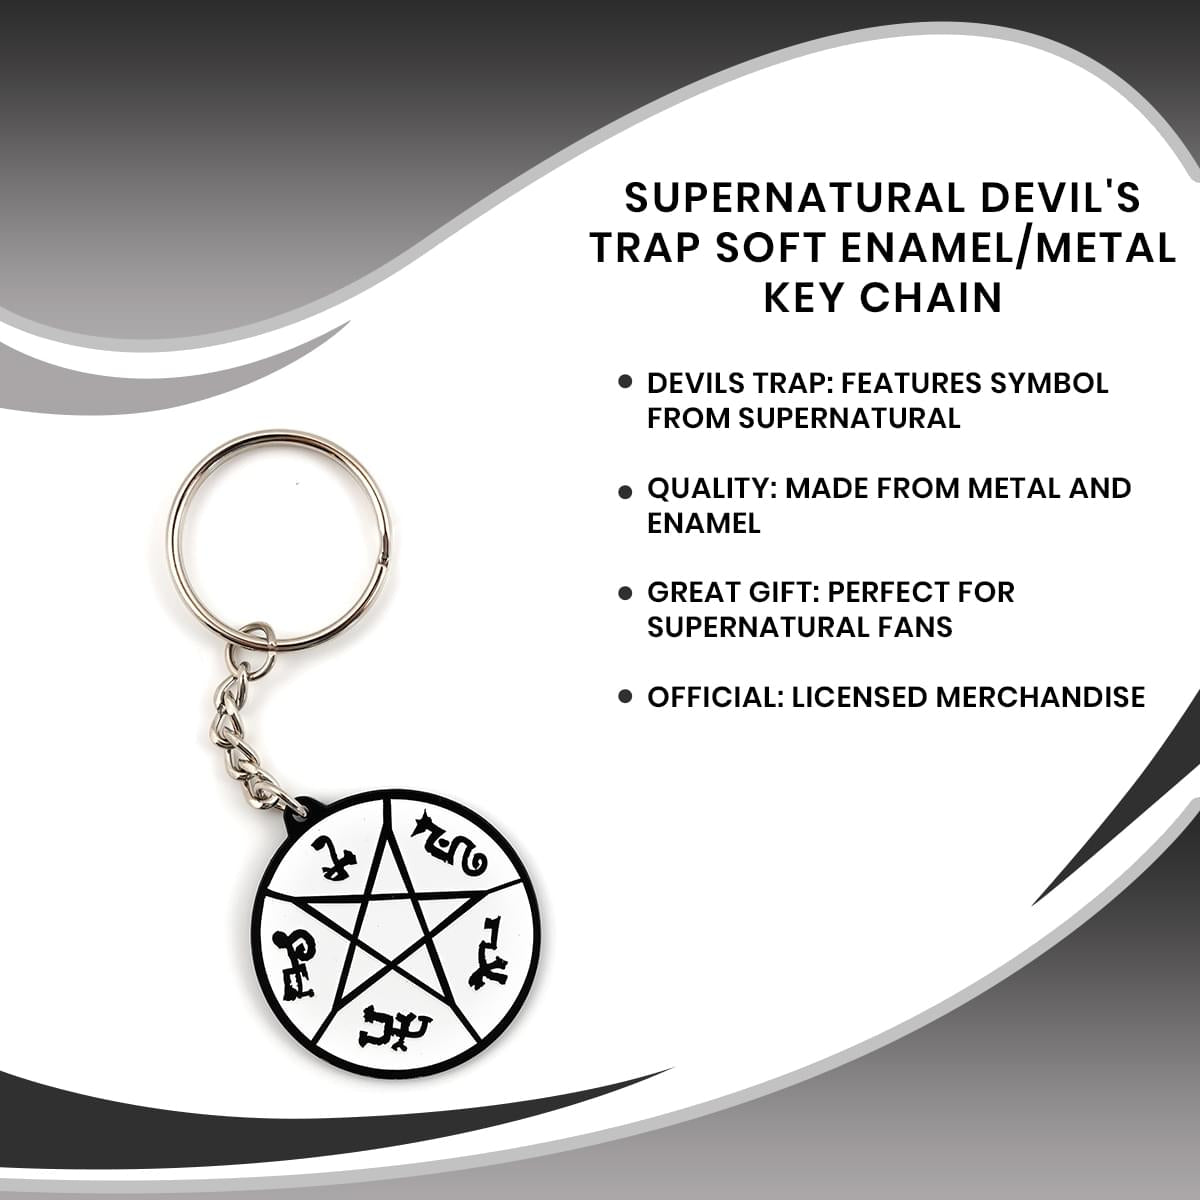 Supernatural Devil's Trap Soft Enamel/Metal Key Chain